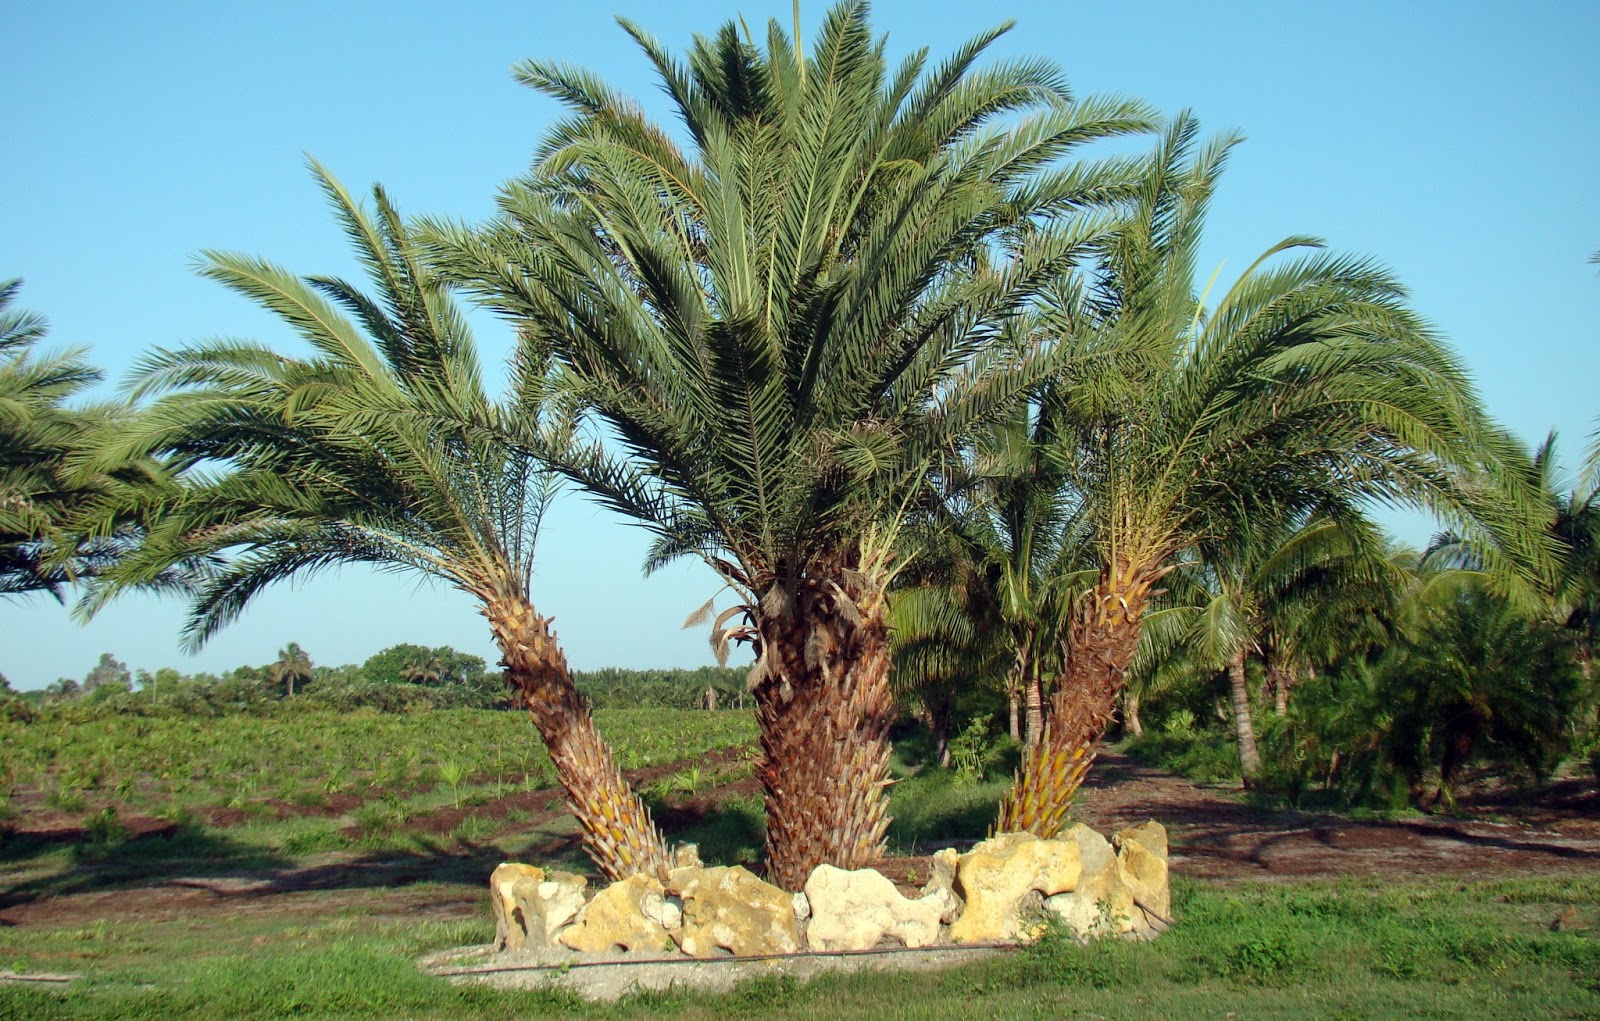 Pine Island, Florida: Summer growing season on Pine Island